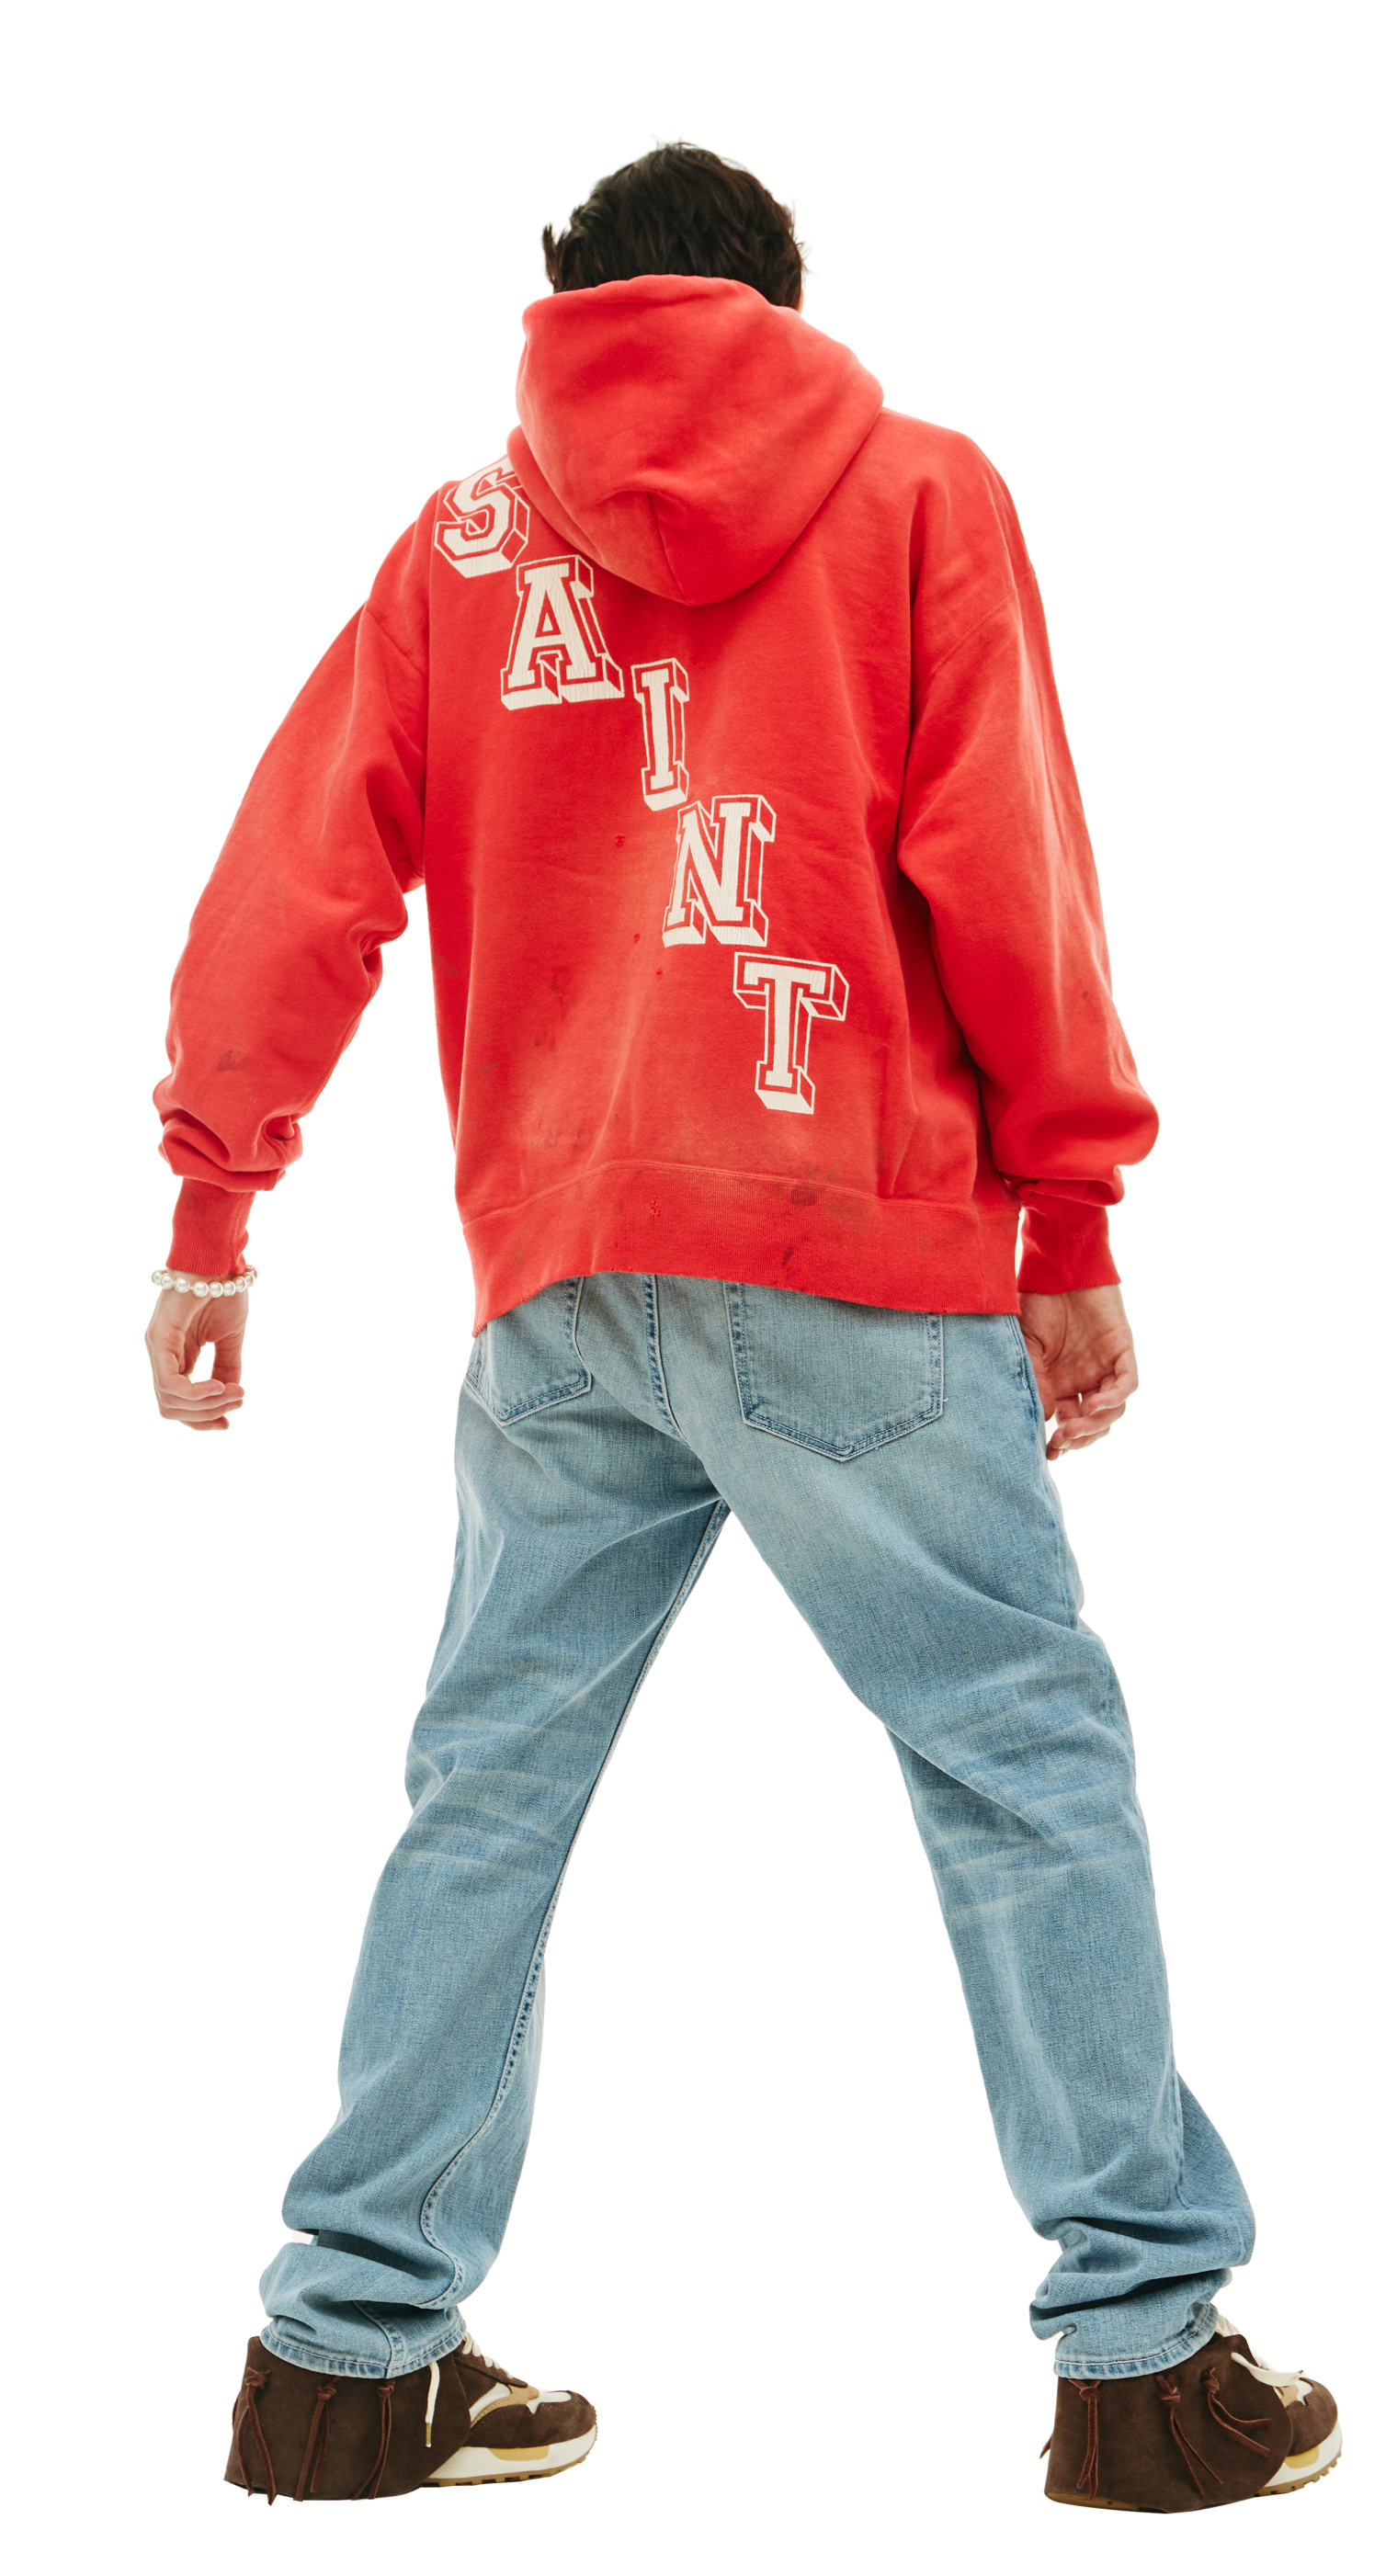 Buy Saint Michael men red faded printed hoodie for $798 online on